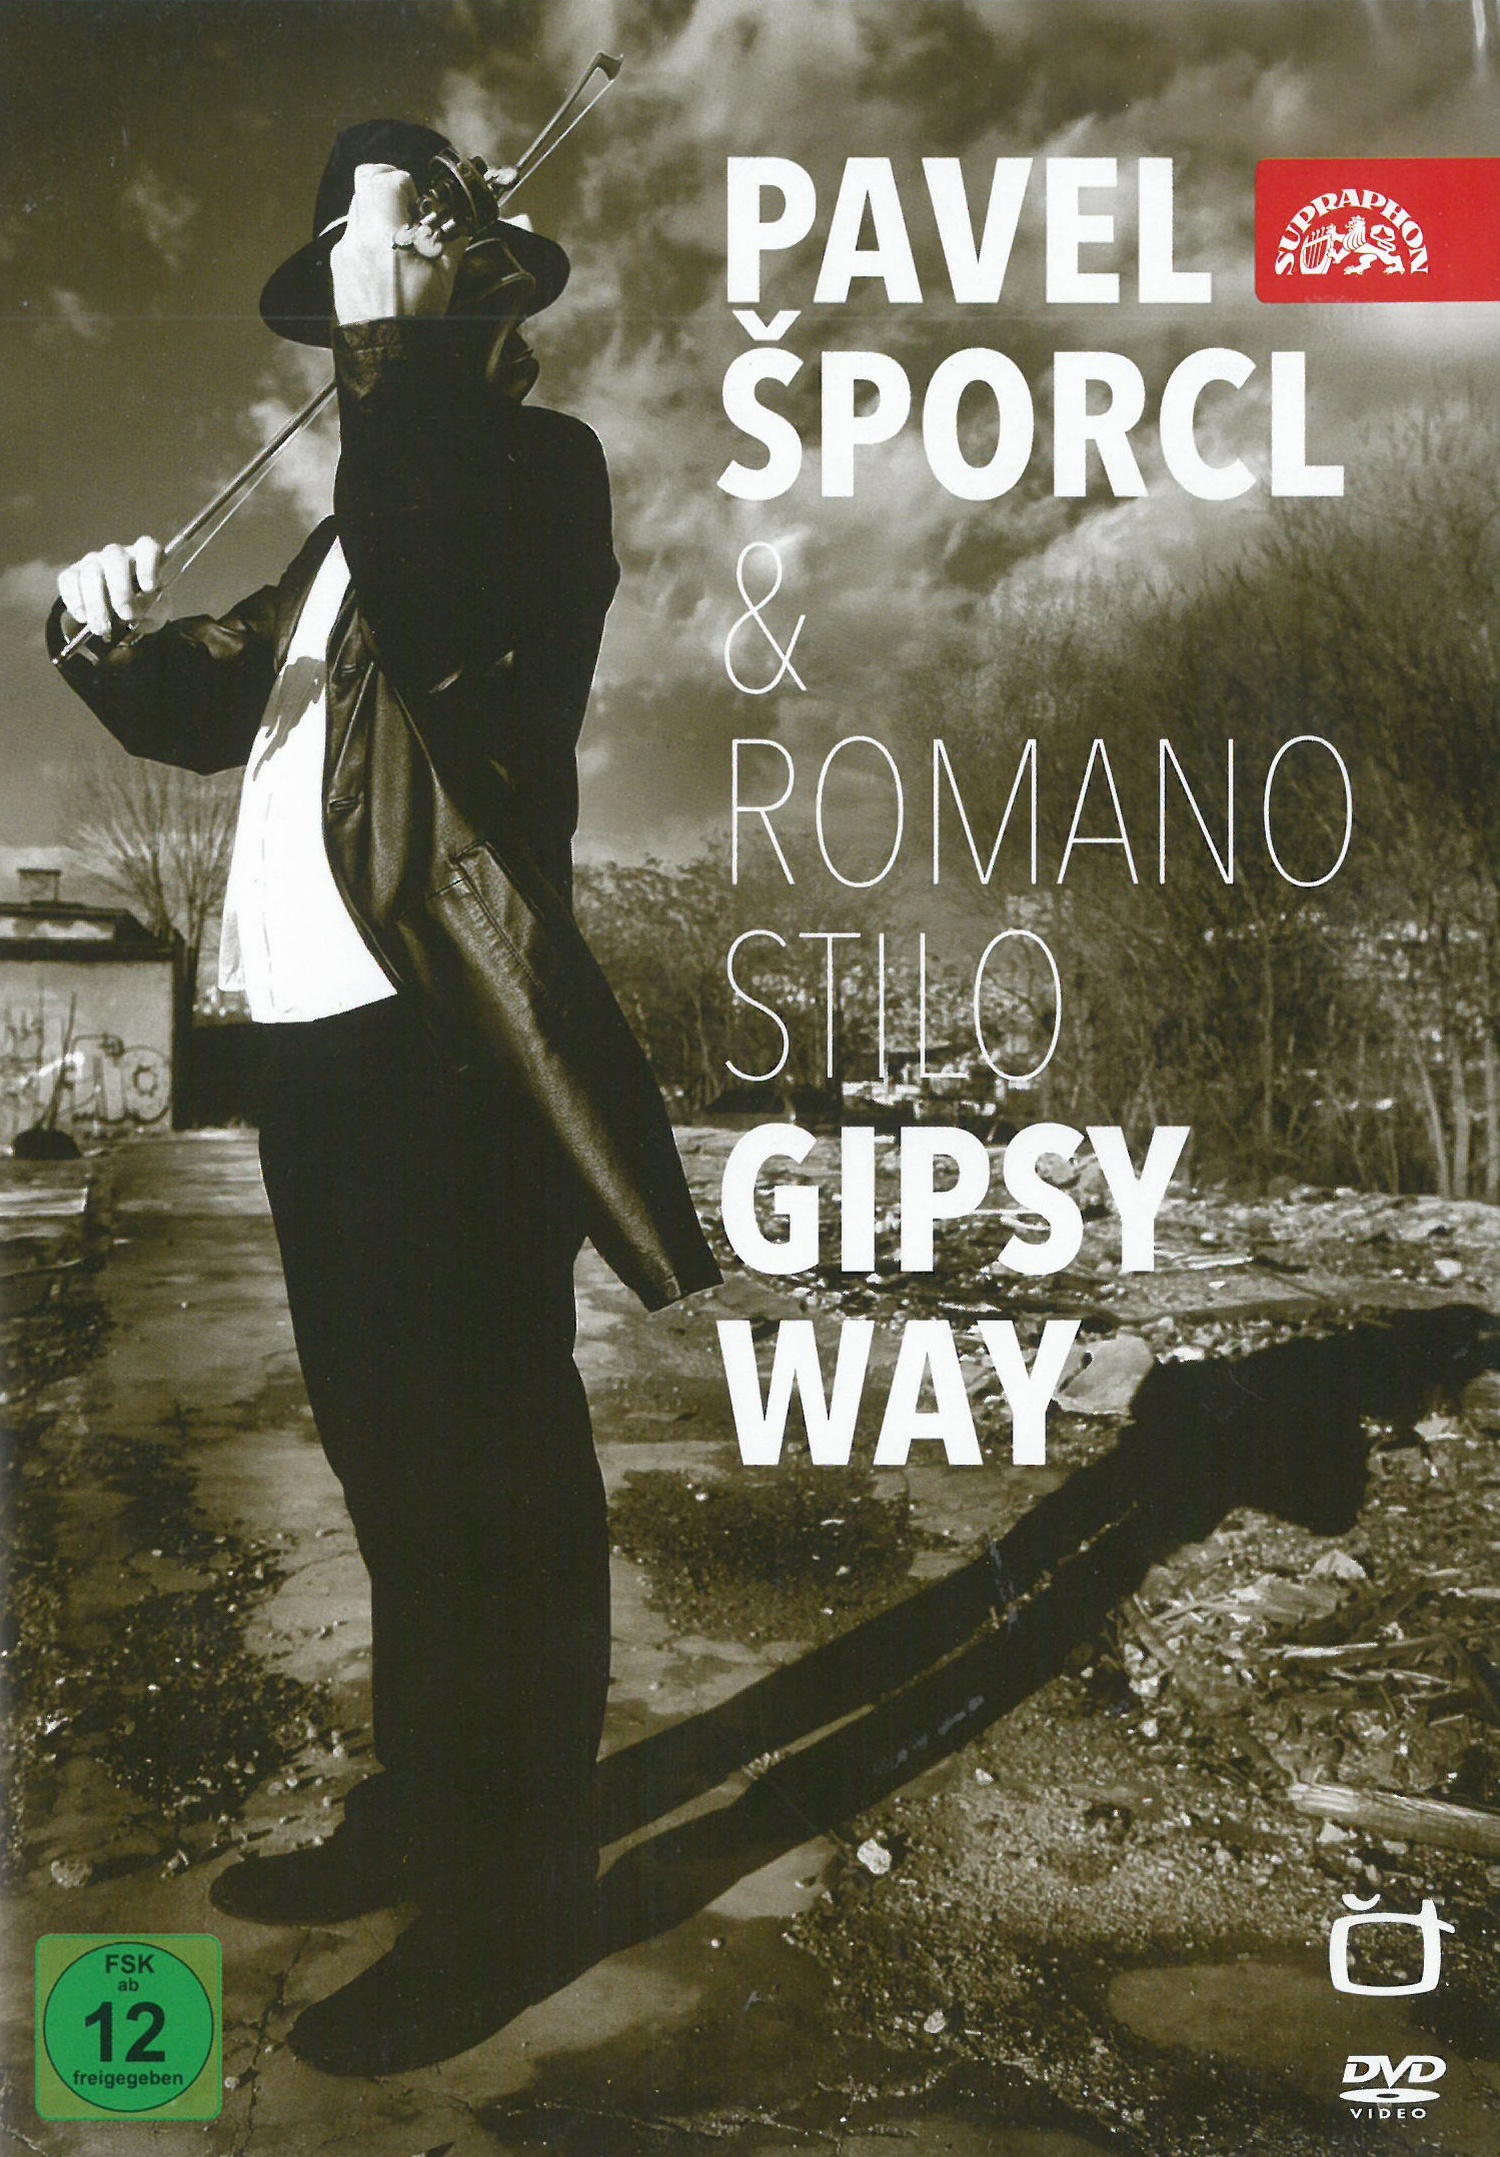 CD Shop - SPORCL PAVEL, ROMANO STILO GIPSY WAY